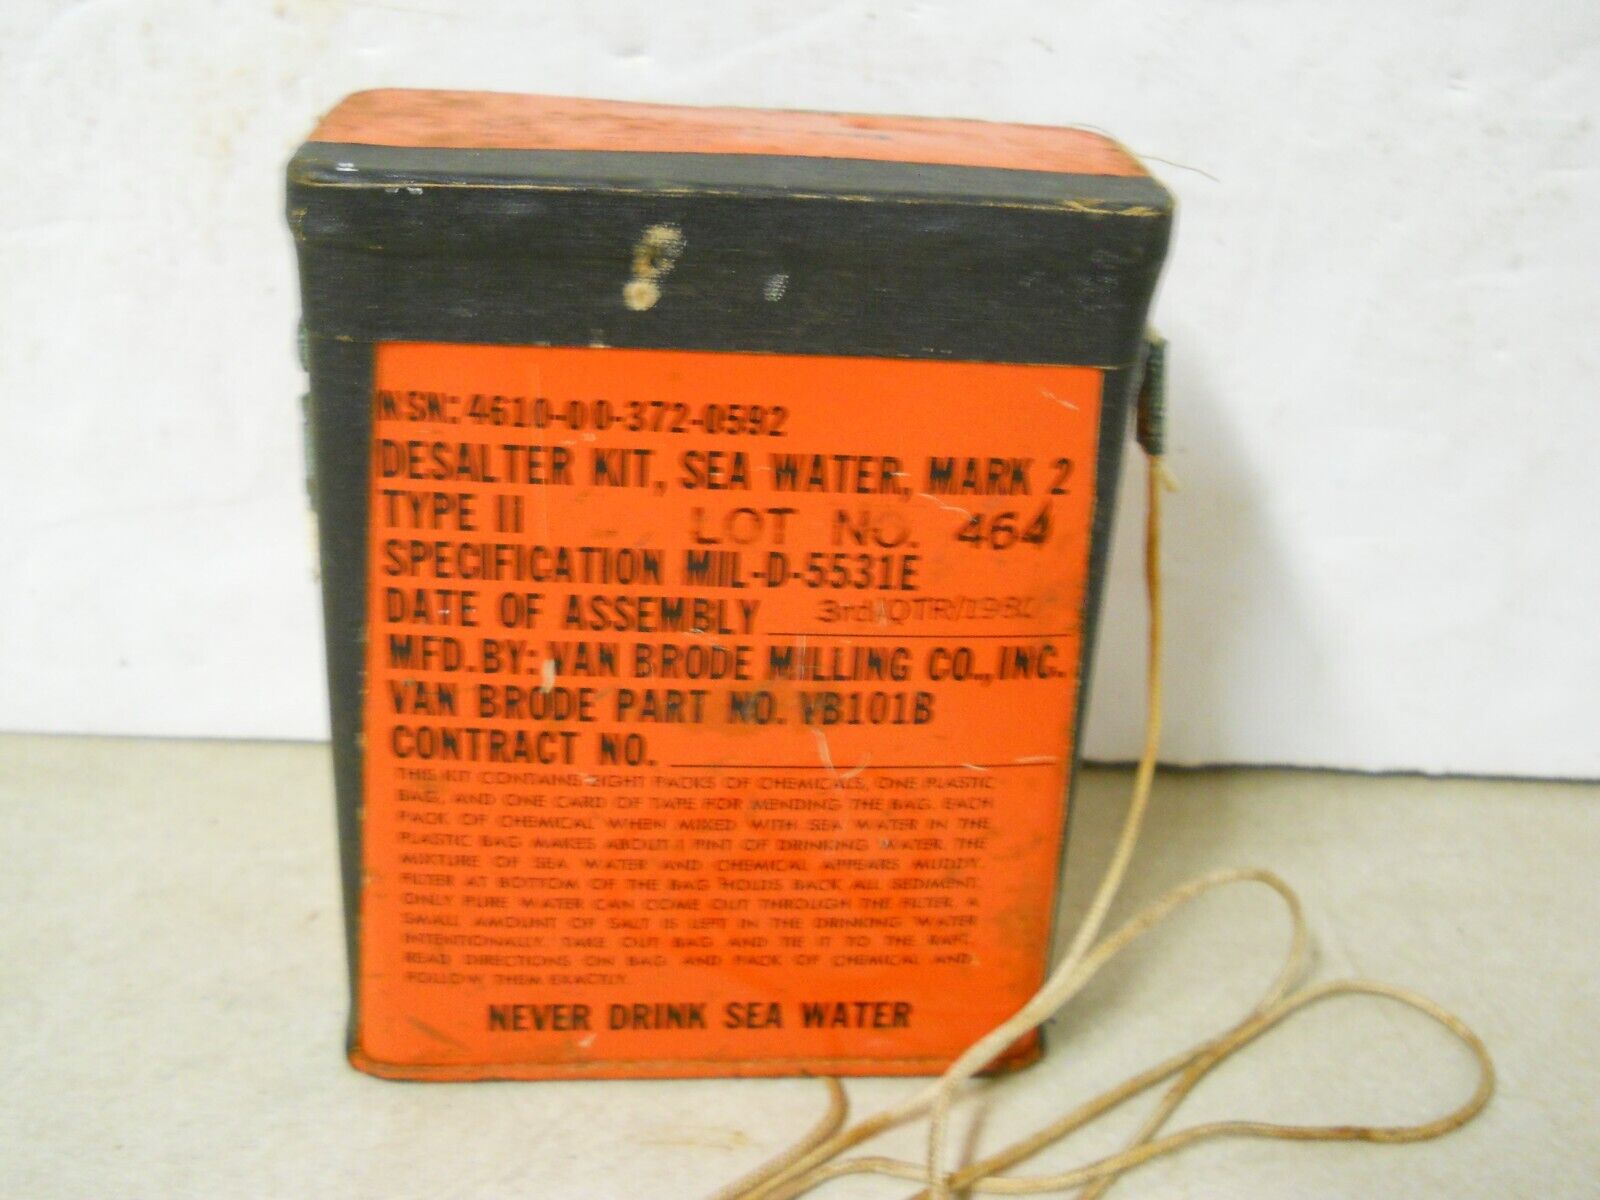 1980 Desalter Kit Sea Water Mark 2 NSN: 4610-00-372-0592 Military Survival Kit